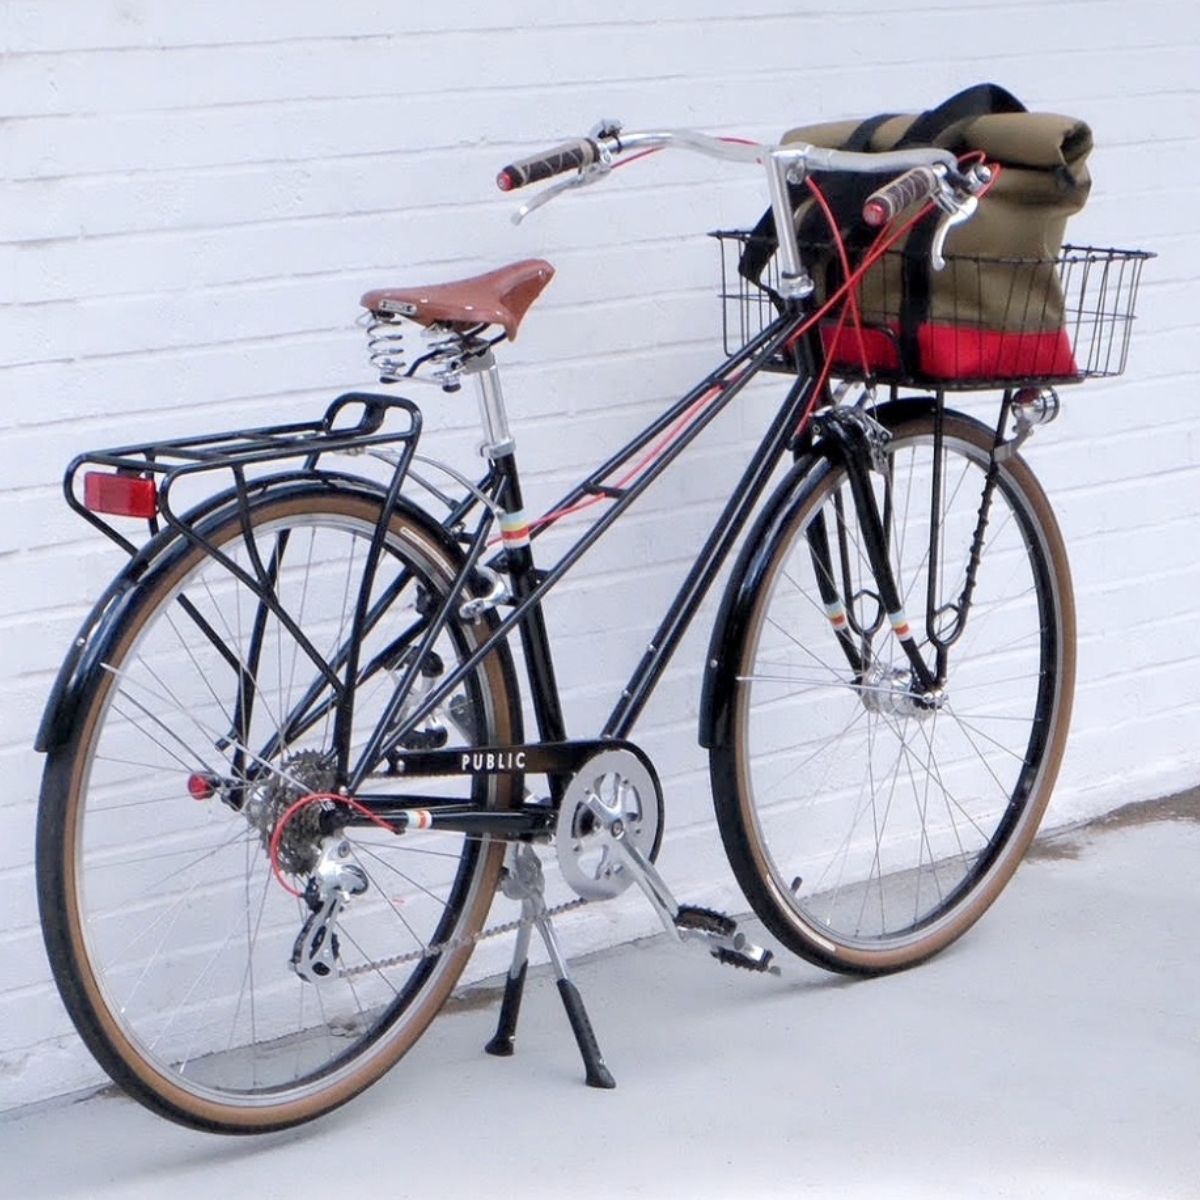 Public Bikes Metal Bike Basket with a backpack